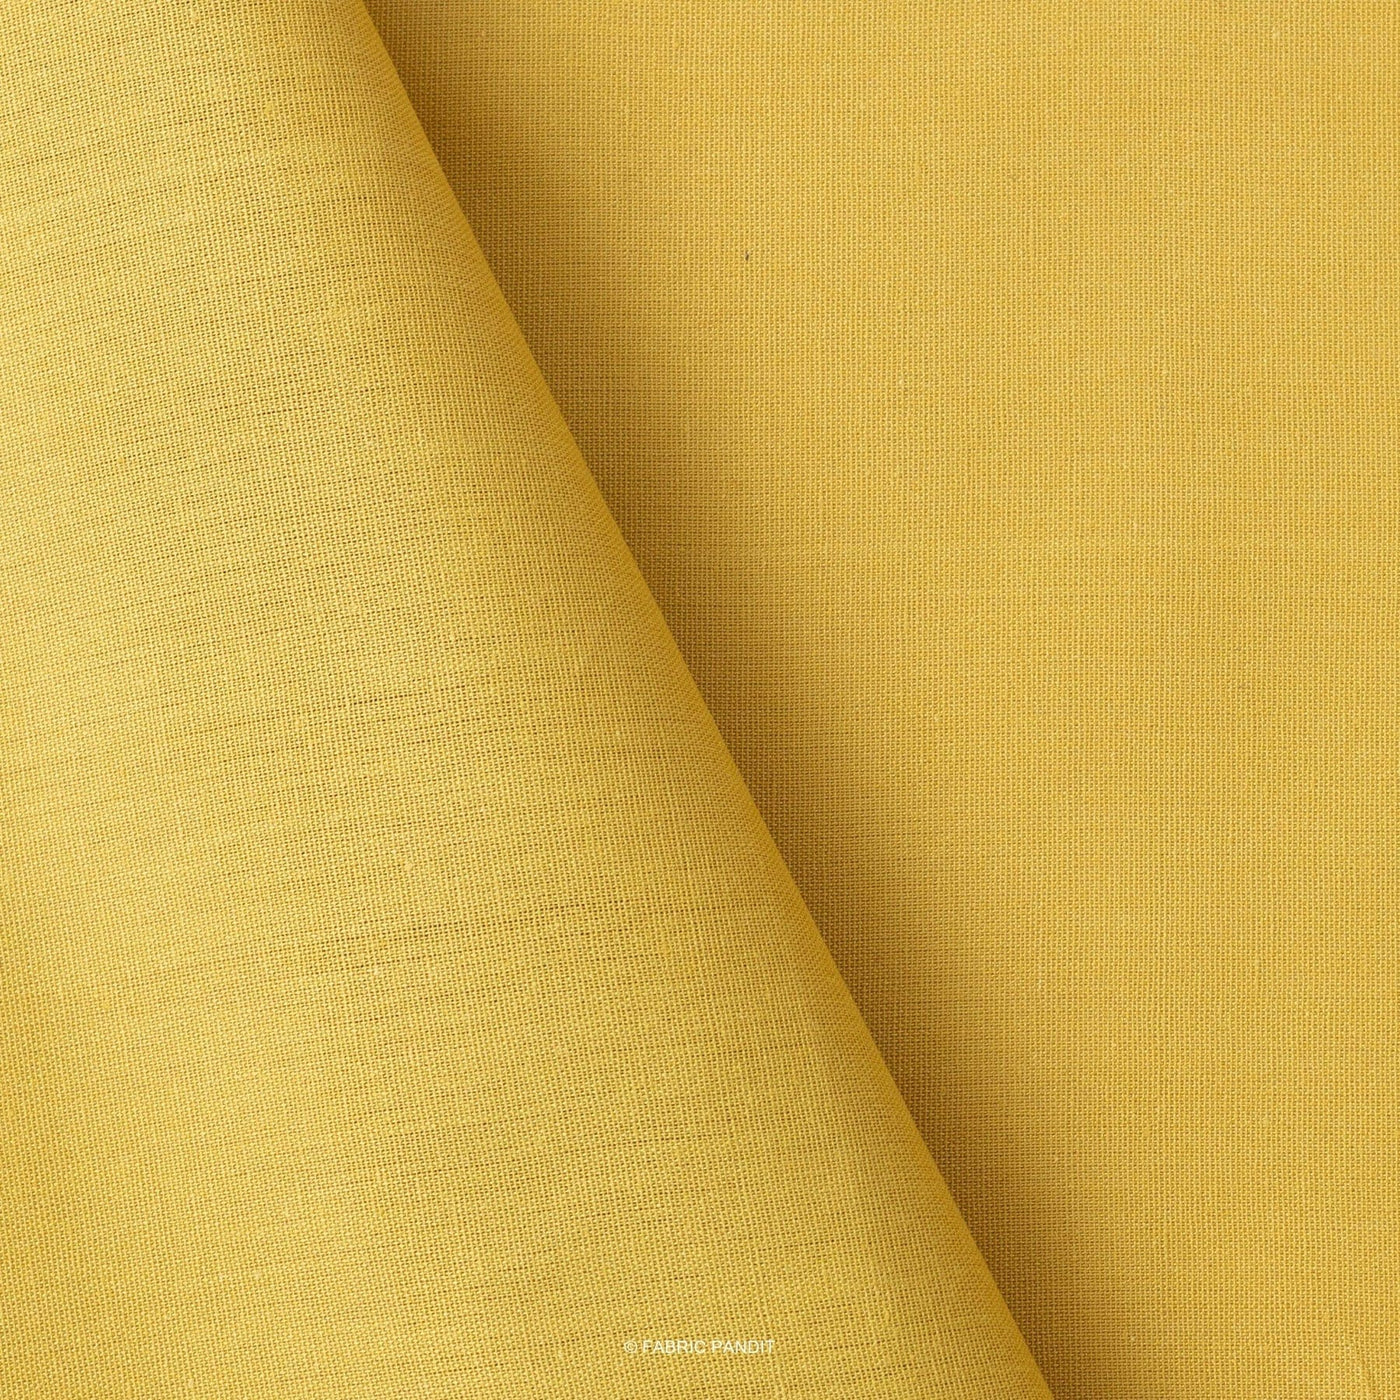 Cotton Linen Fabric Cut Piece (CUT PIECE) Mustard Yellow Color Pure Cotton Linen Fabric (Width 42 Inches)